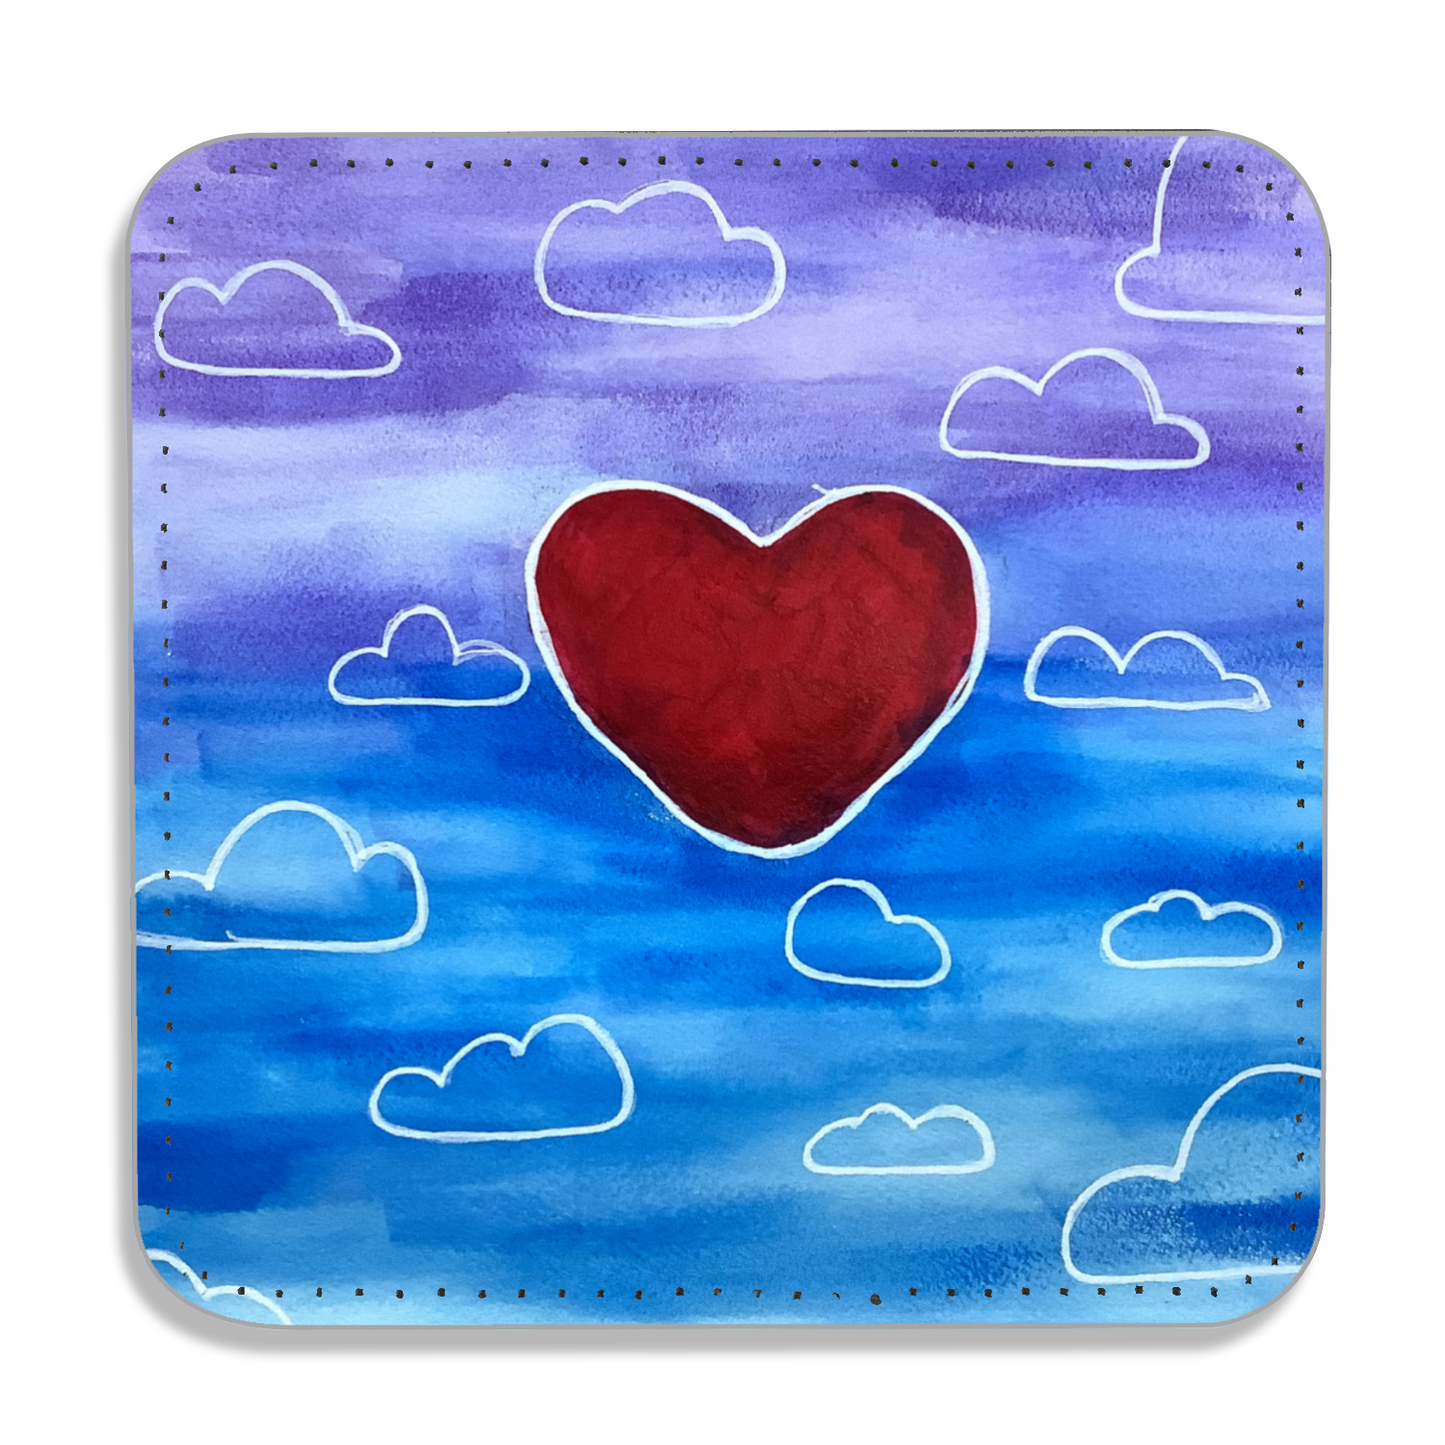 Twist Hearts "Symbols of Love" Single Vegan Leather Coaster